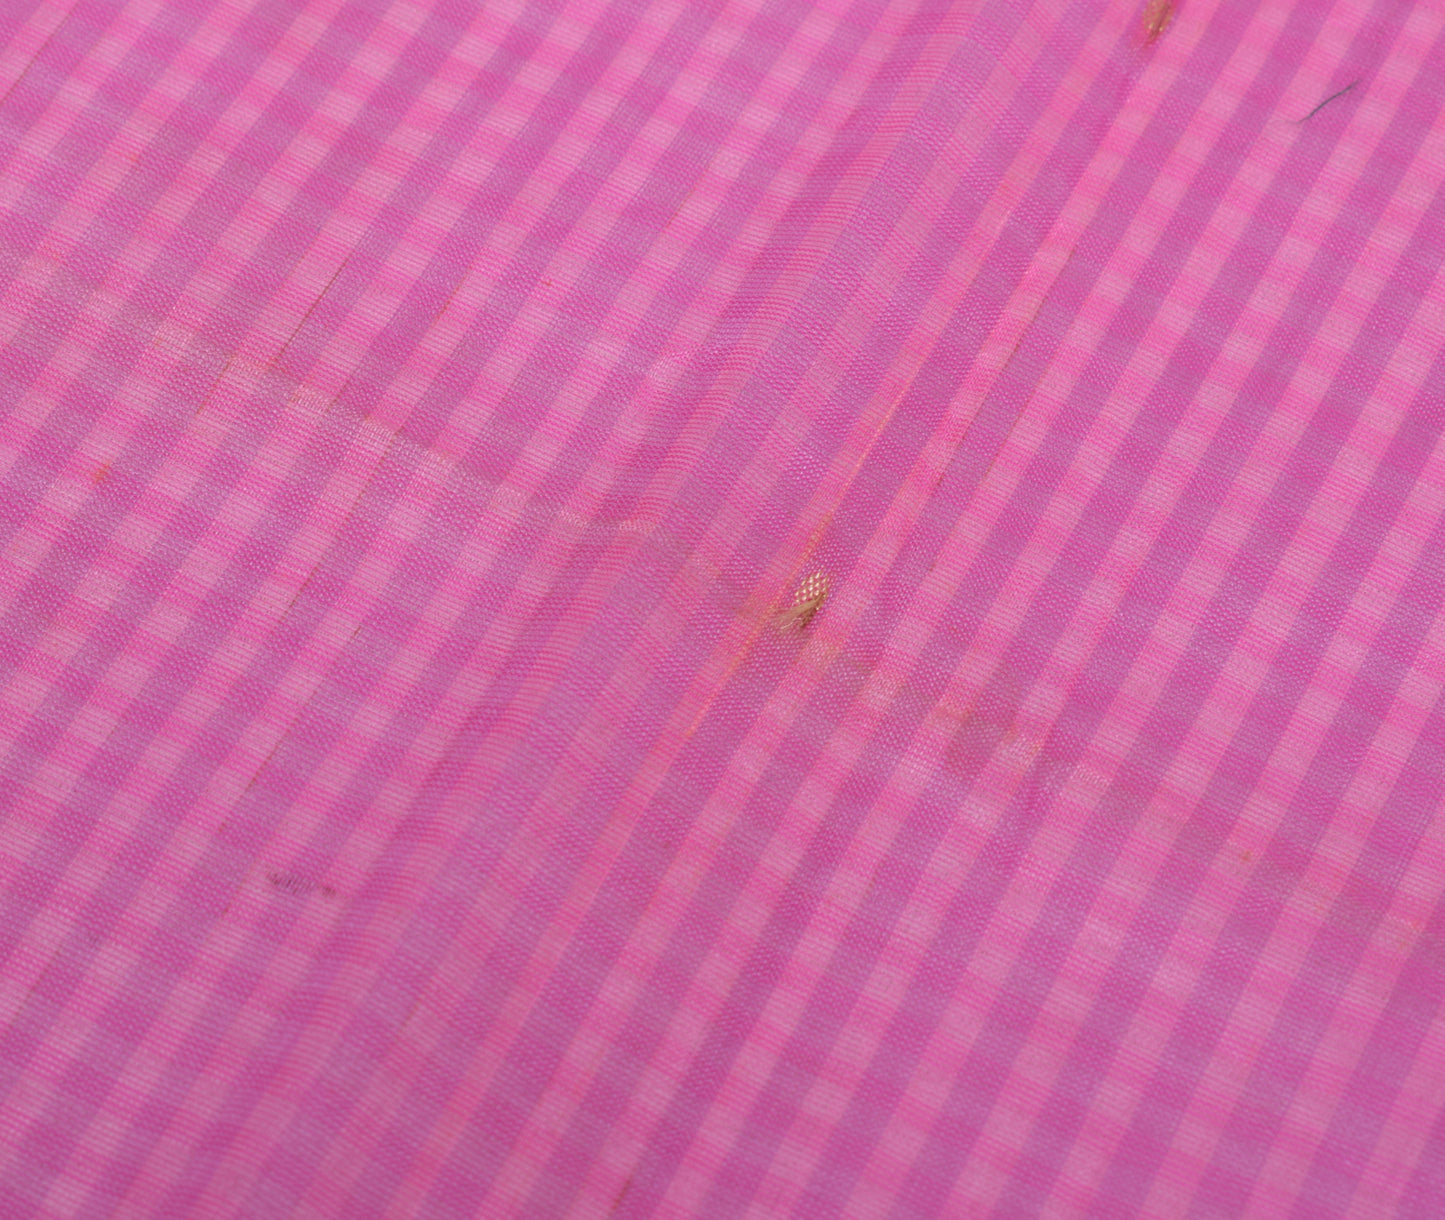 Sushila Vintage Pink Indian Dupatta 100% Pure Silk Checks Woven Long Stole Veil